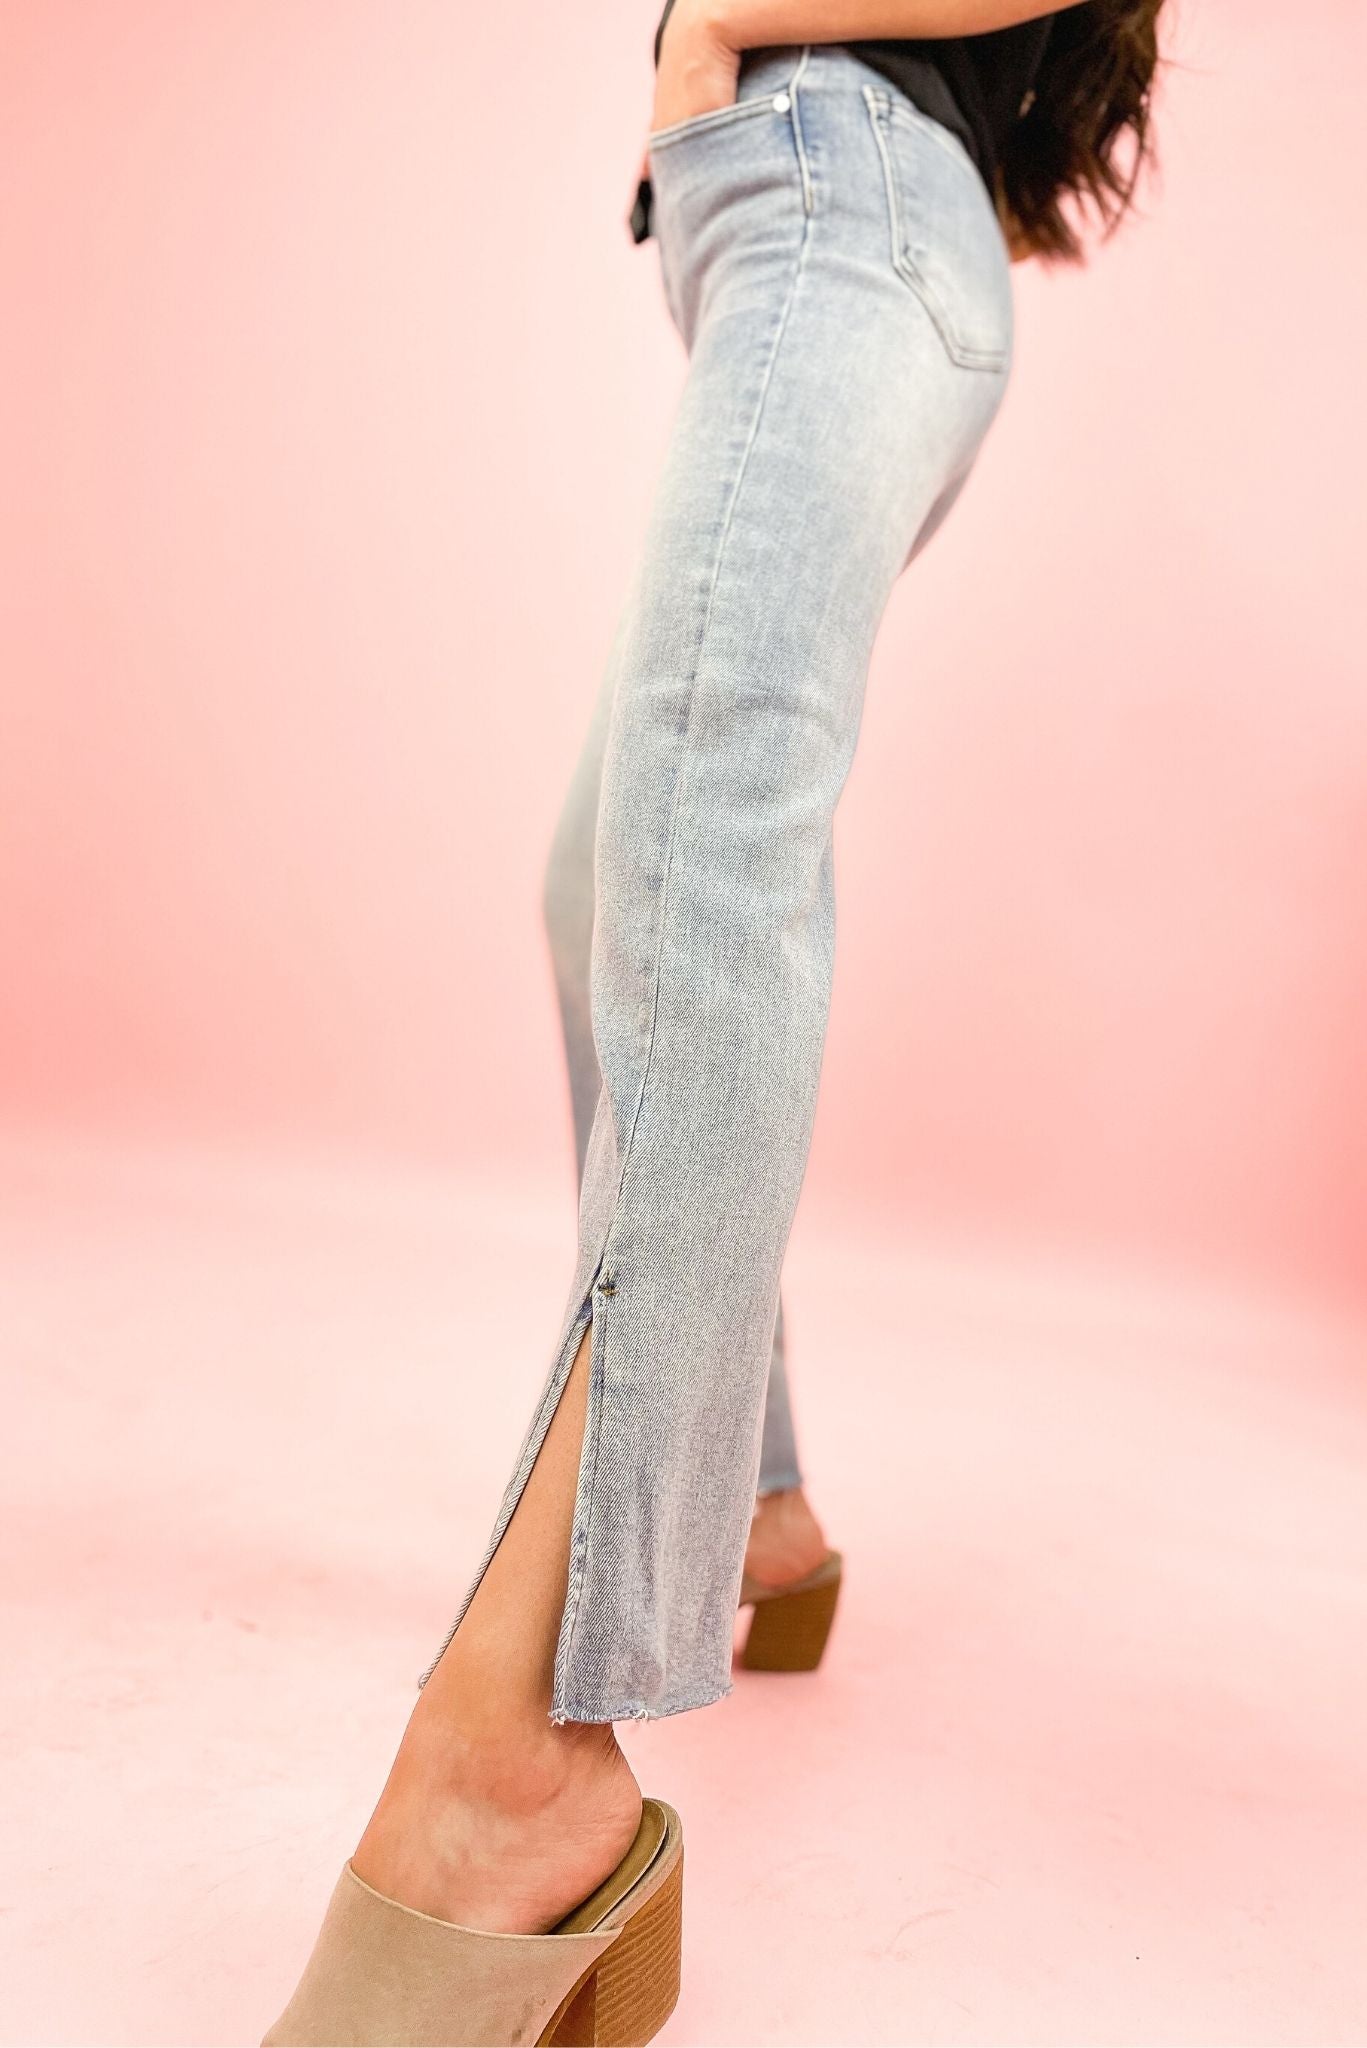  Light Wash Straight Leg Jeans, cropped, split hem, detailed, light wash, straight leg, shop style your sense by mallory fitzsimmons